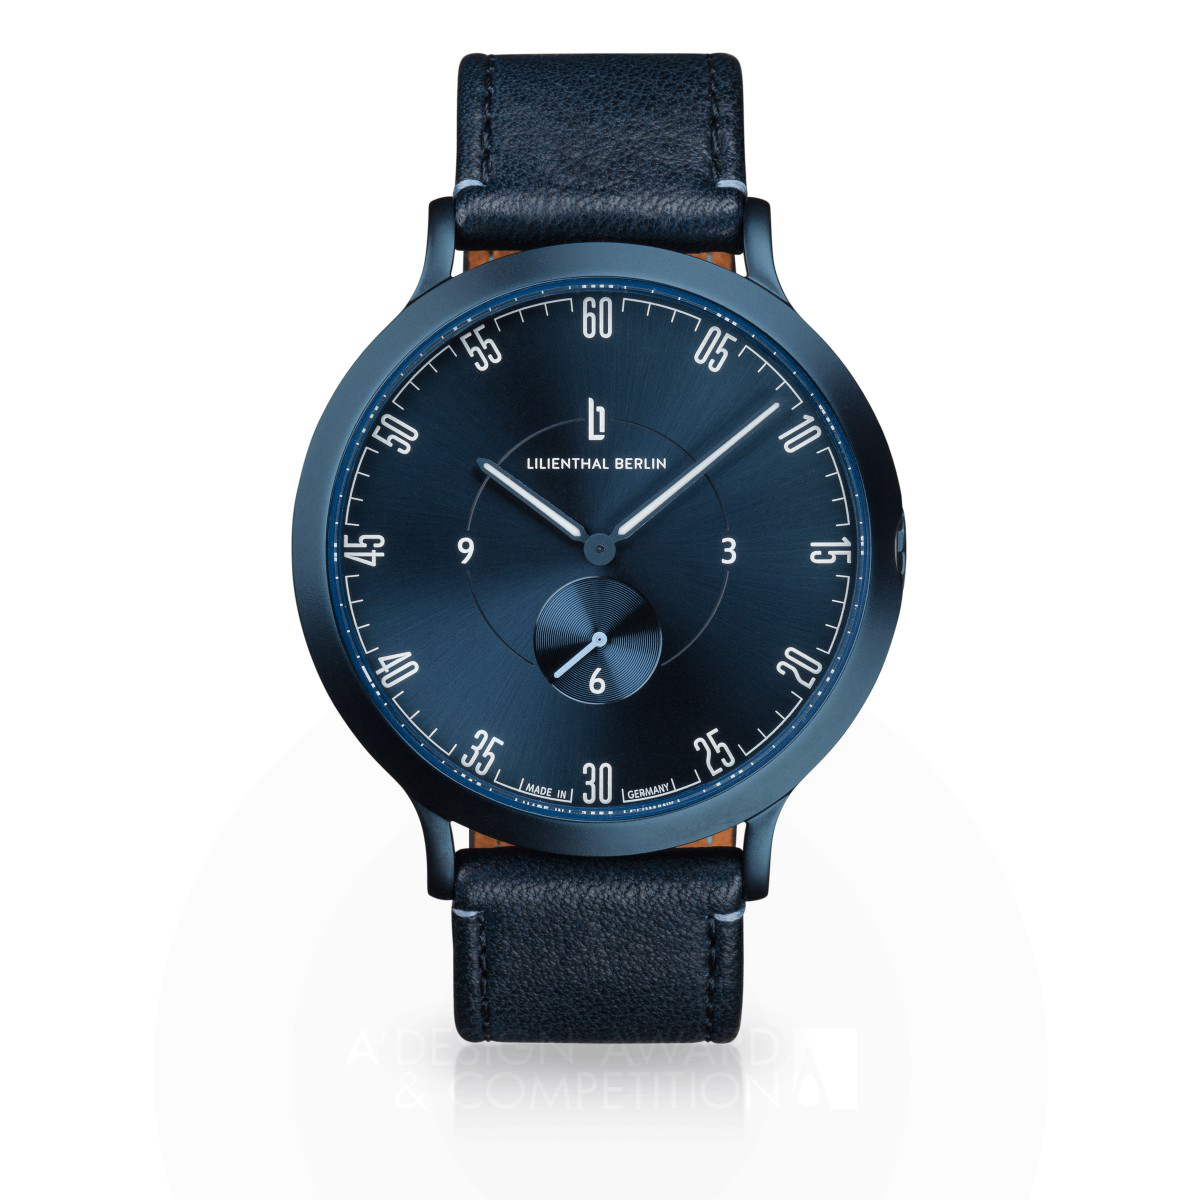 Lars Hofmann wins Platinum at the prestigious A' Jewelry Design Award with L1 All Blue Watch.